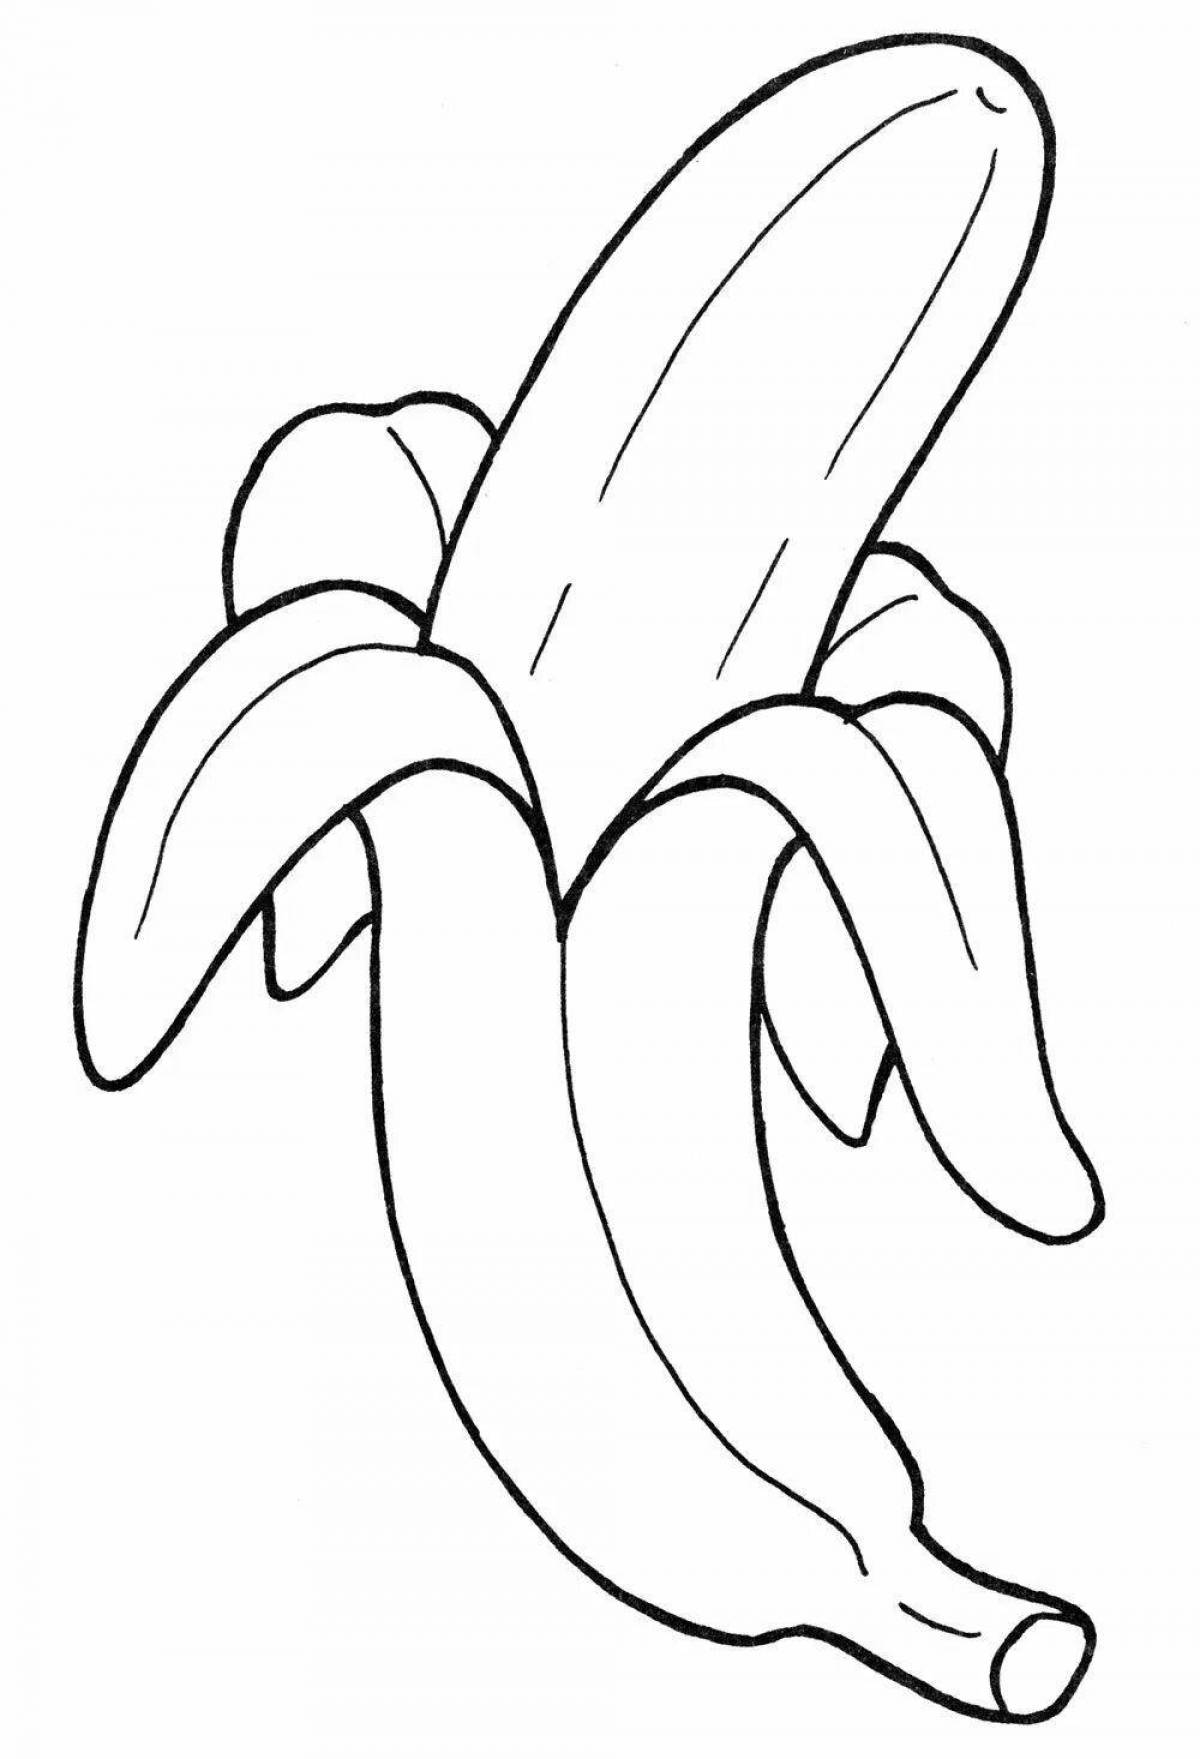 Творческий рисунок банана